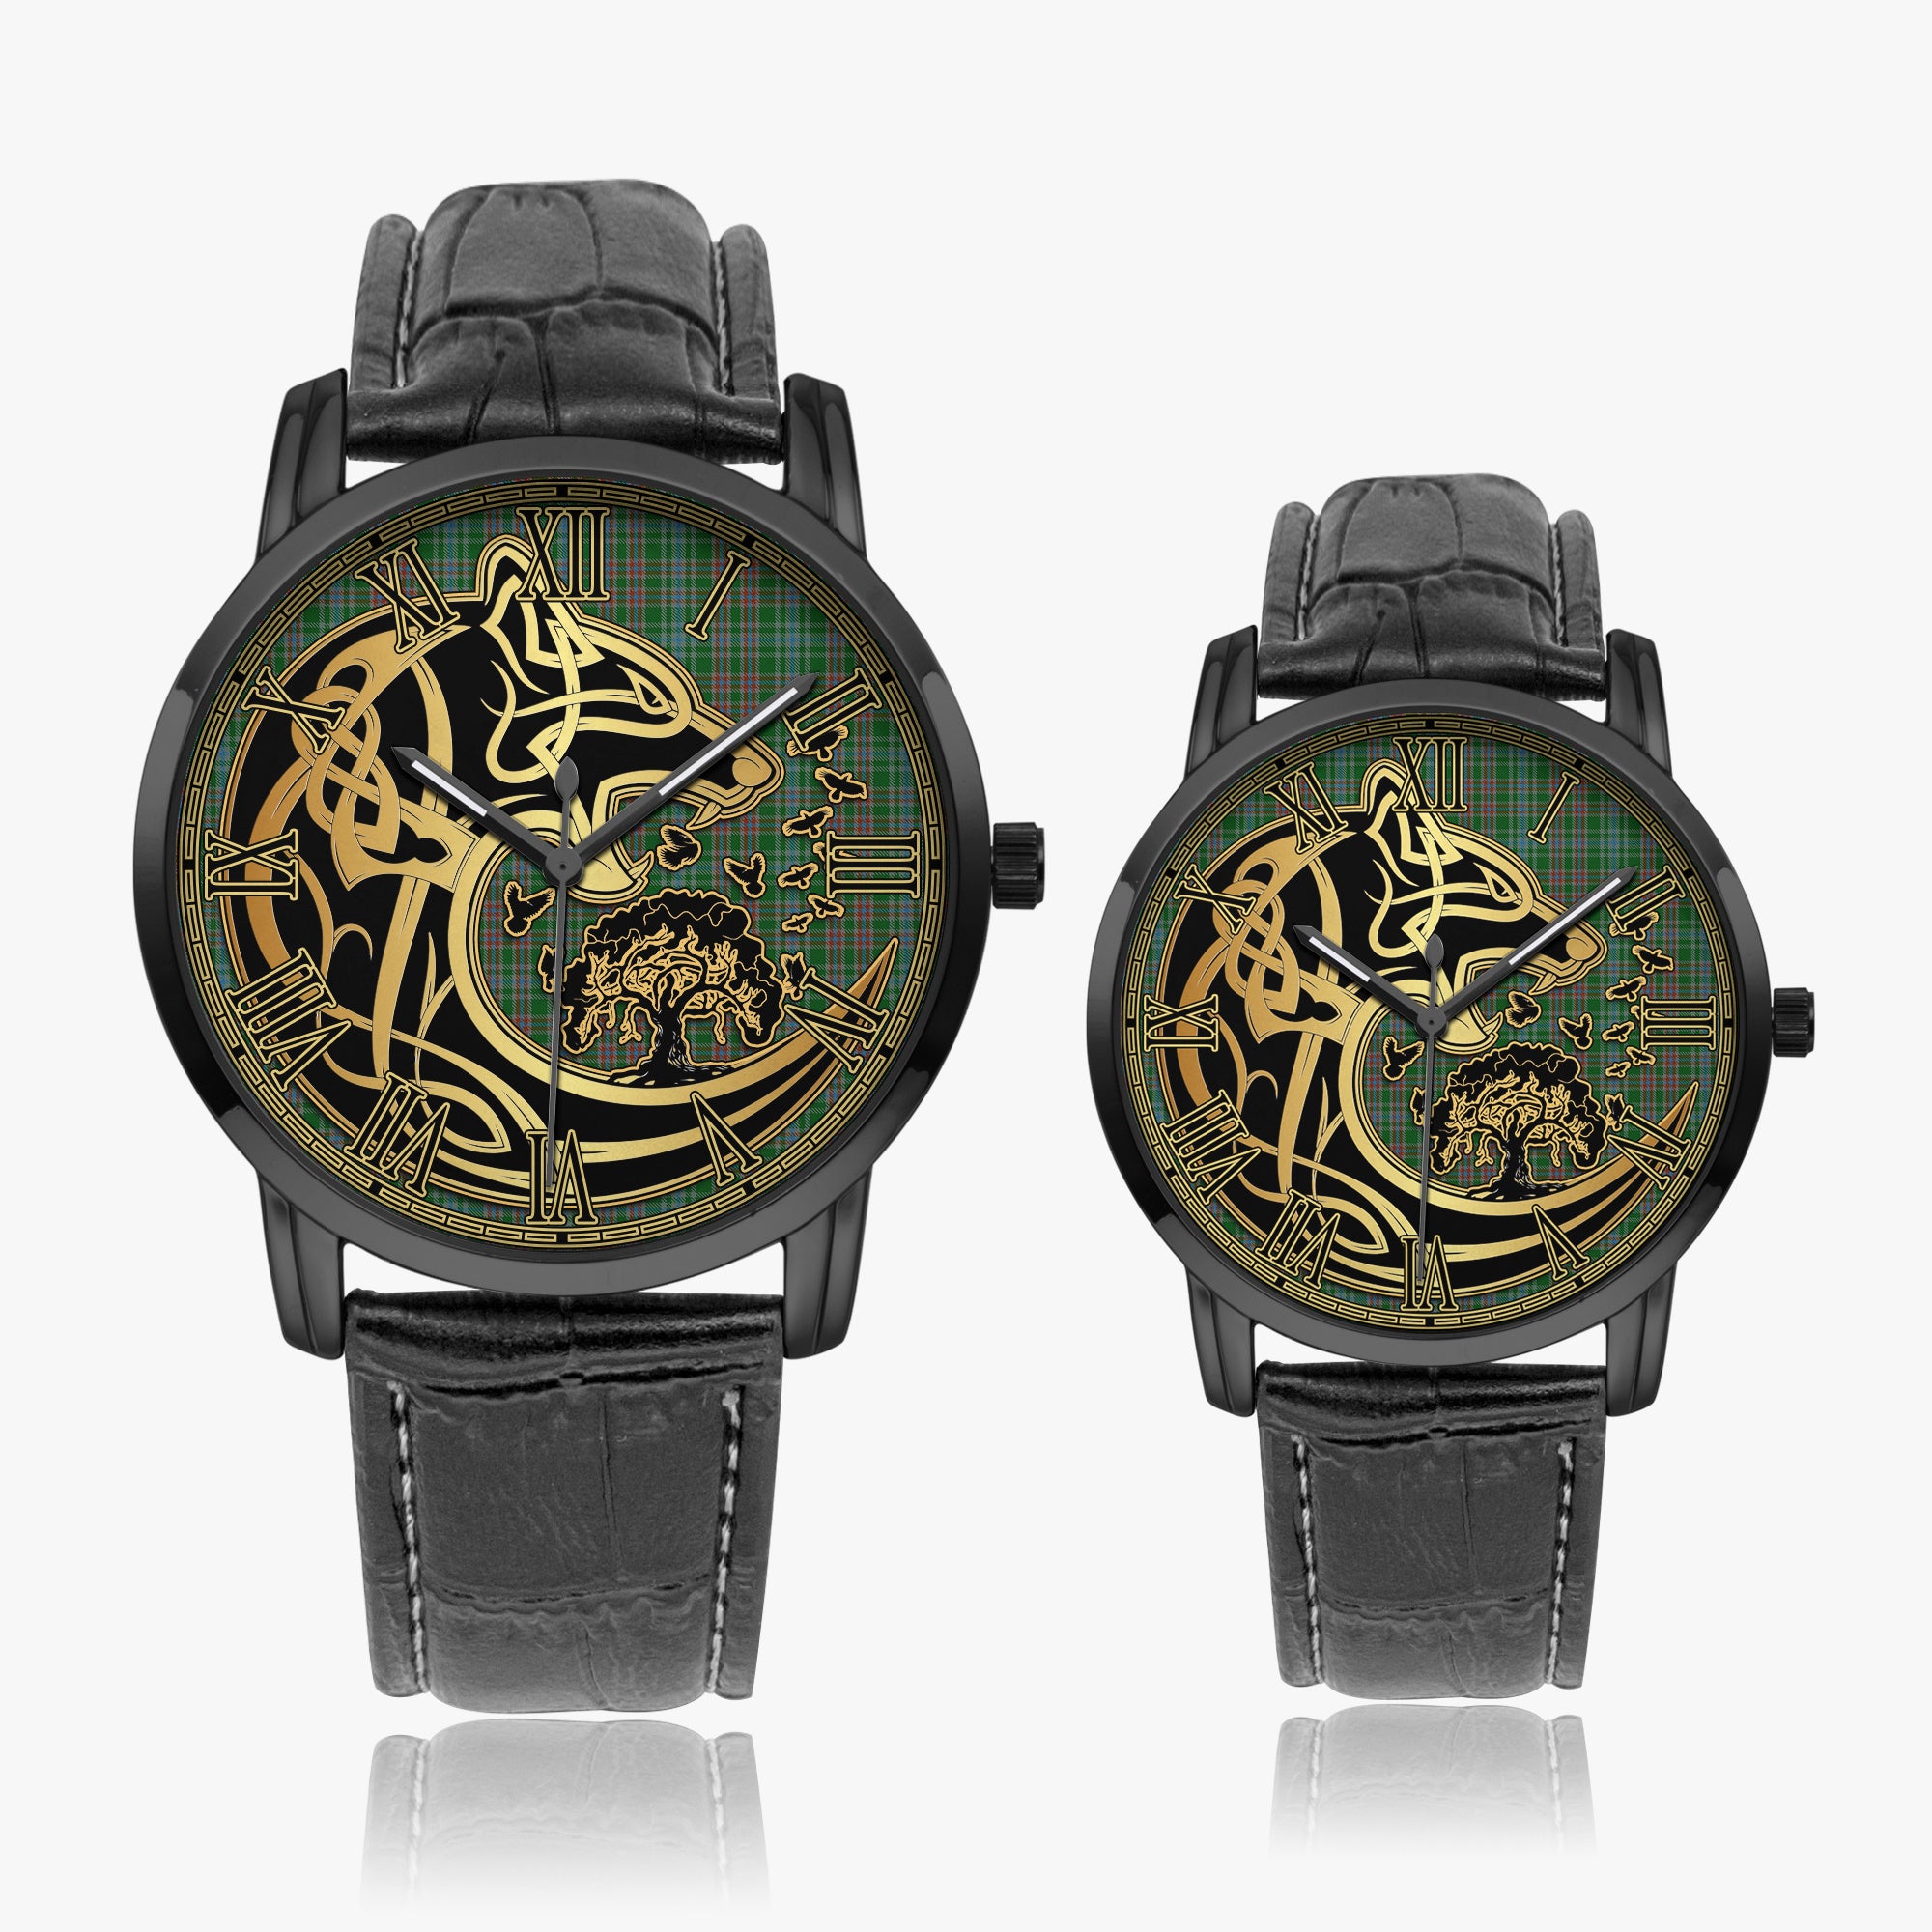 ralston-usa-tartan-watch-with-leather-trap-tartan-instafamous-quartz-leather-strap-watch-golden-celtic-wolf-style